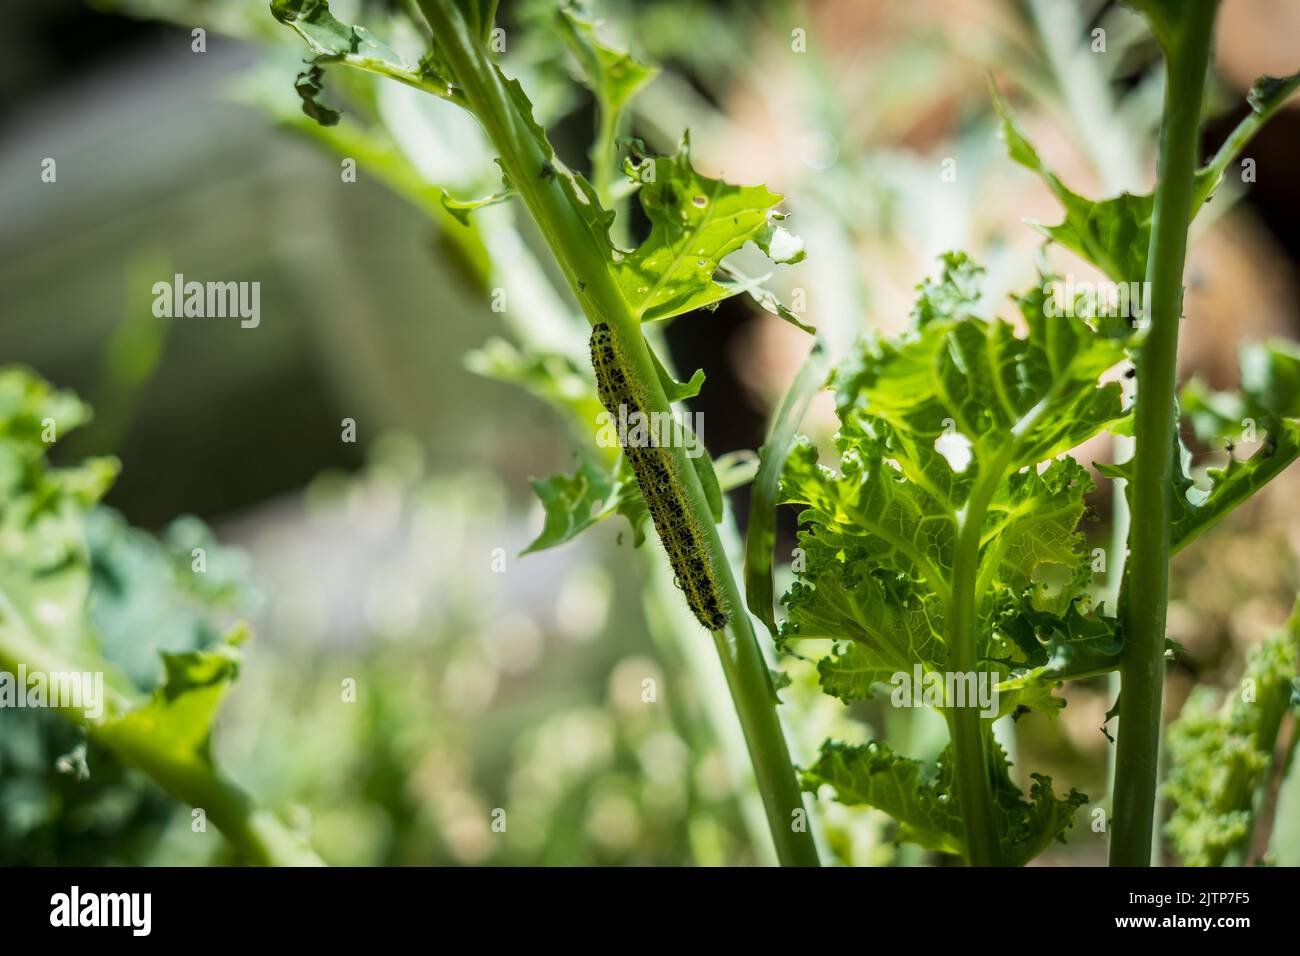 Caterpillars eating kale cabbage. Stock Photo